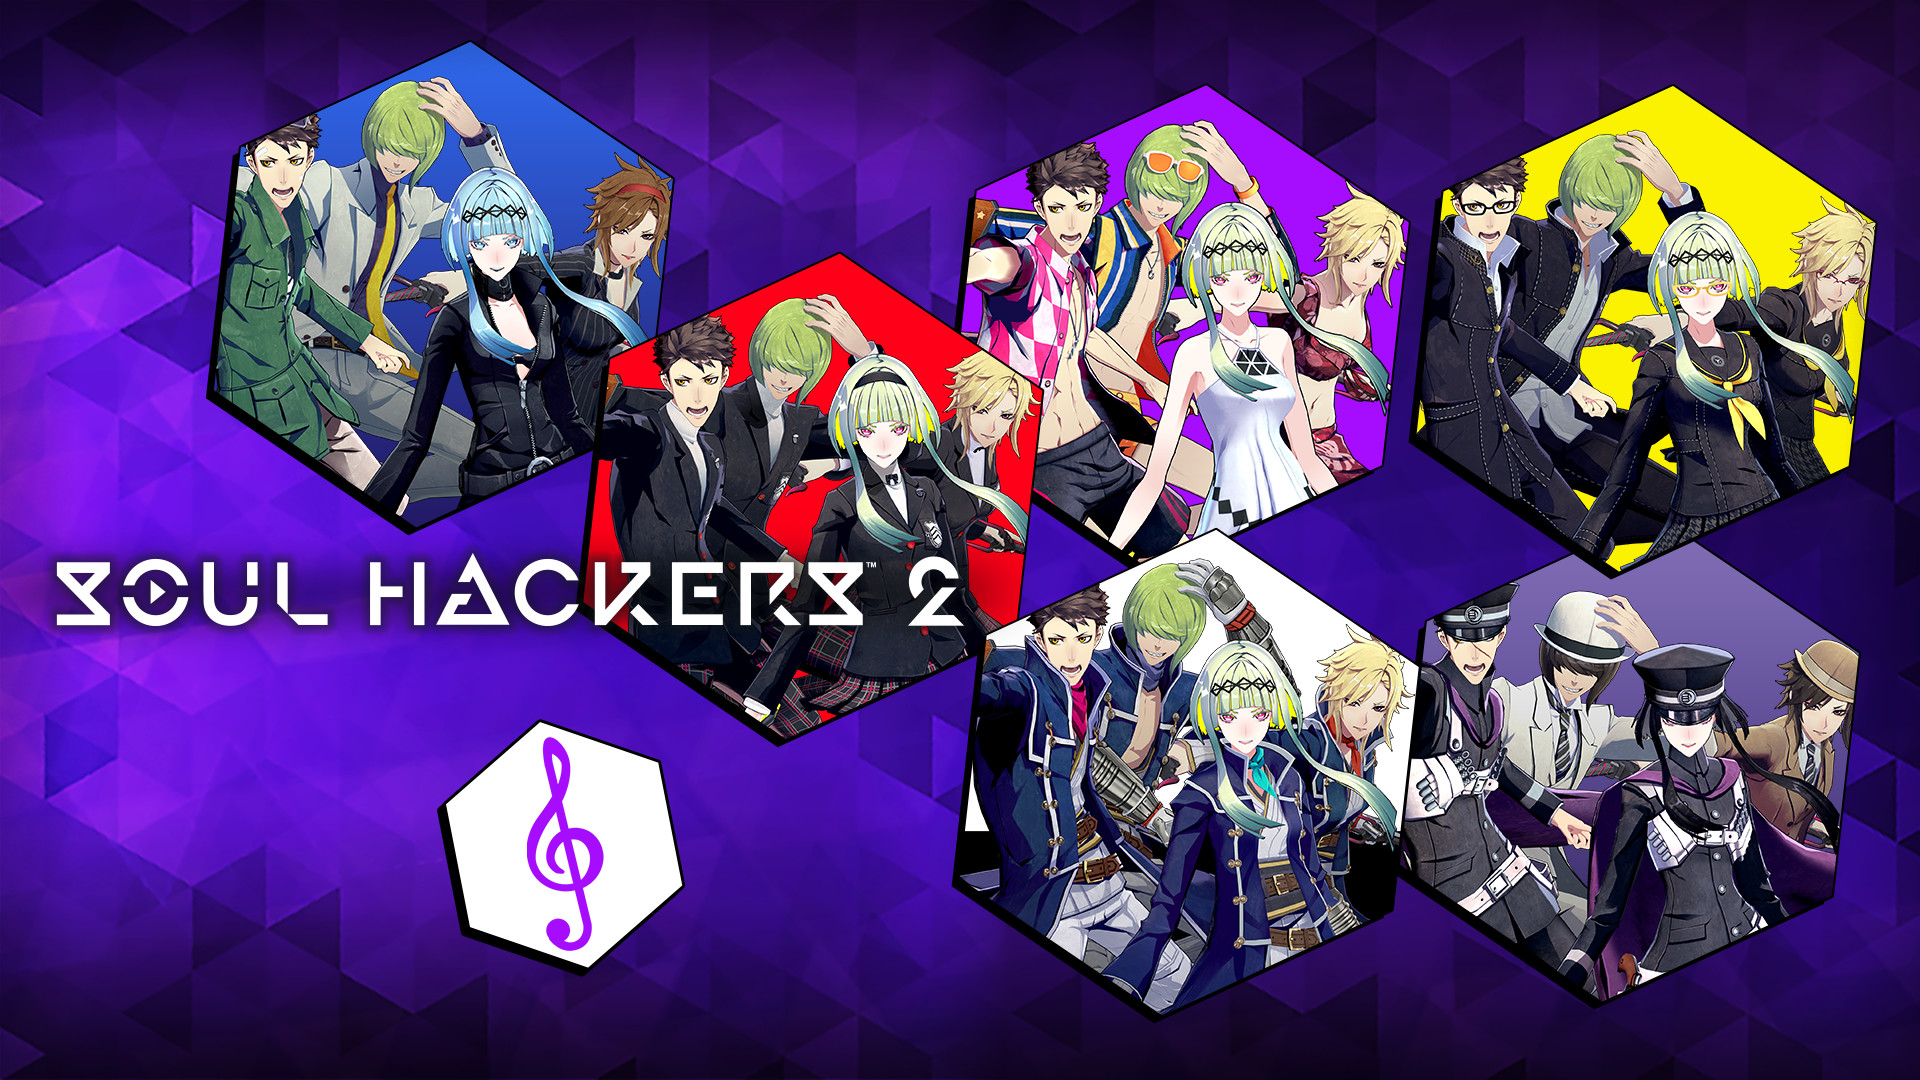 Soul Hackers 2 - Costume & BGM Pack Featured Screenshot #1